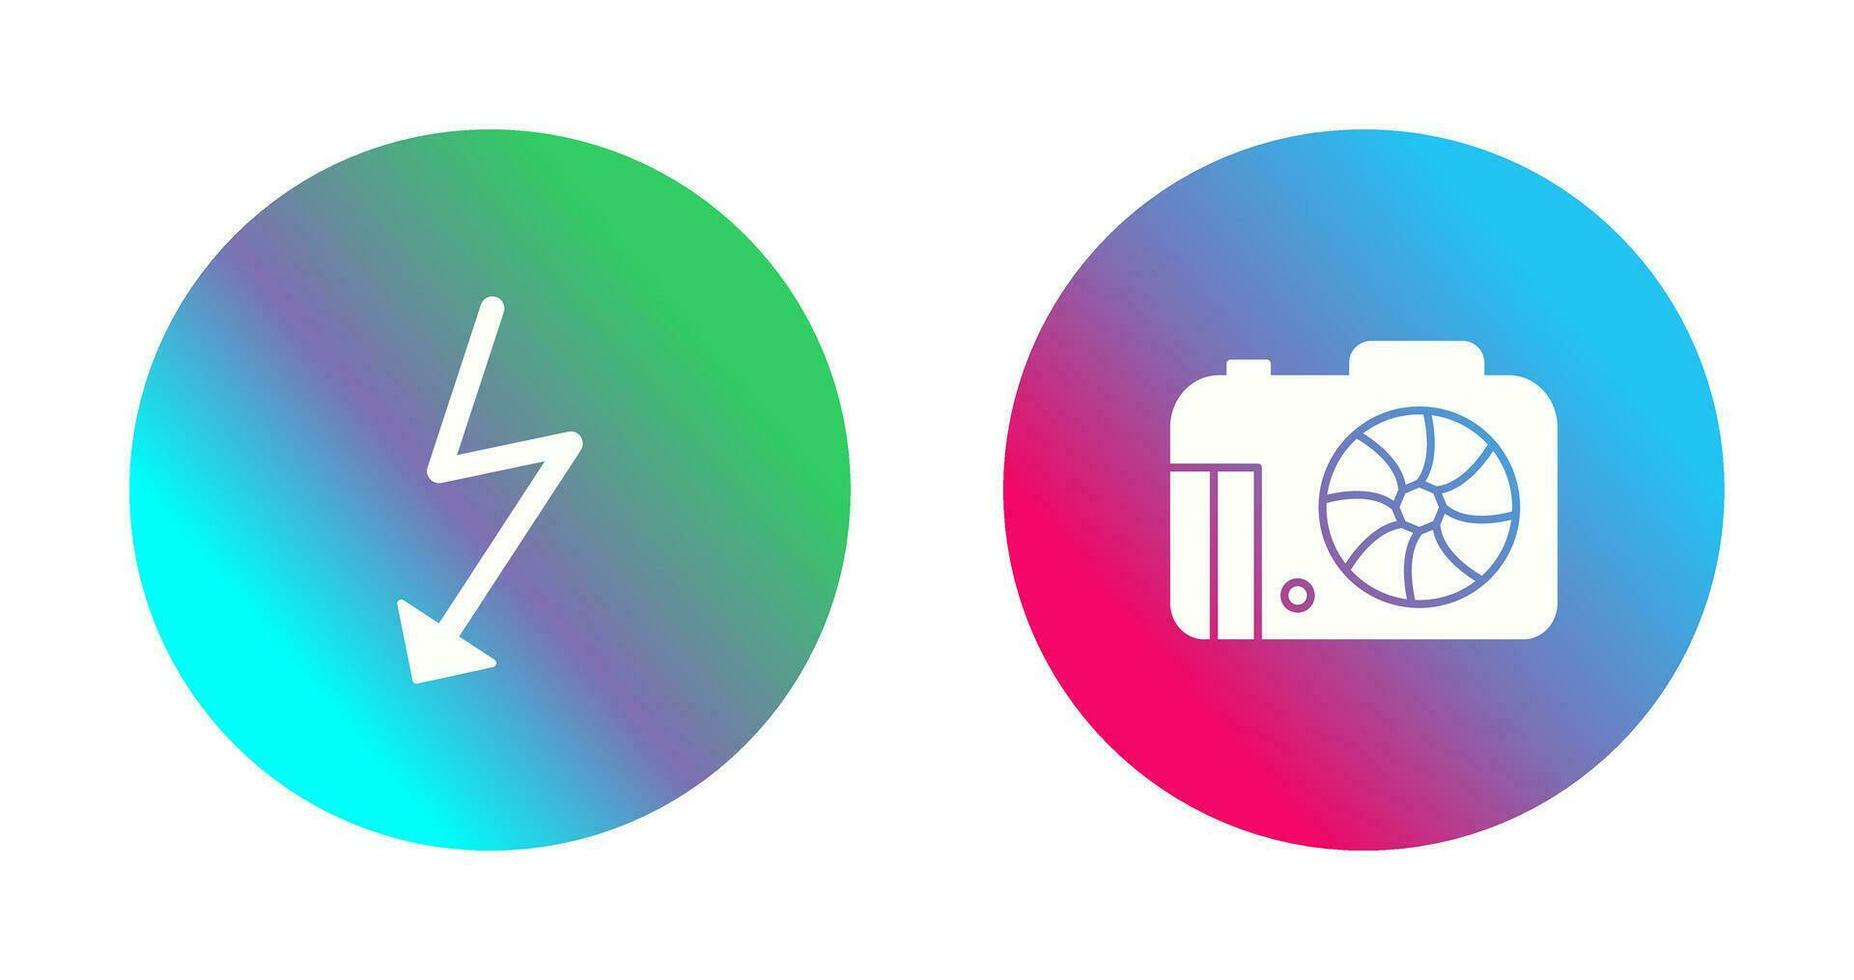 flash and camera Icon vector